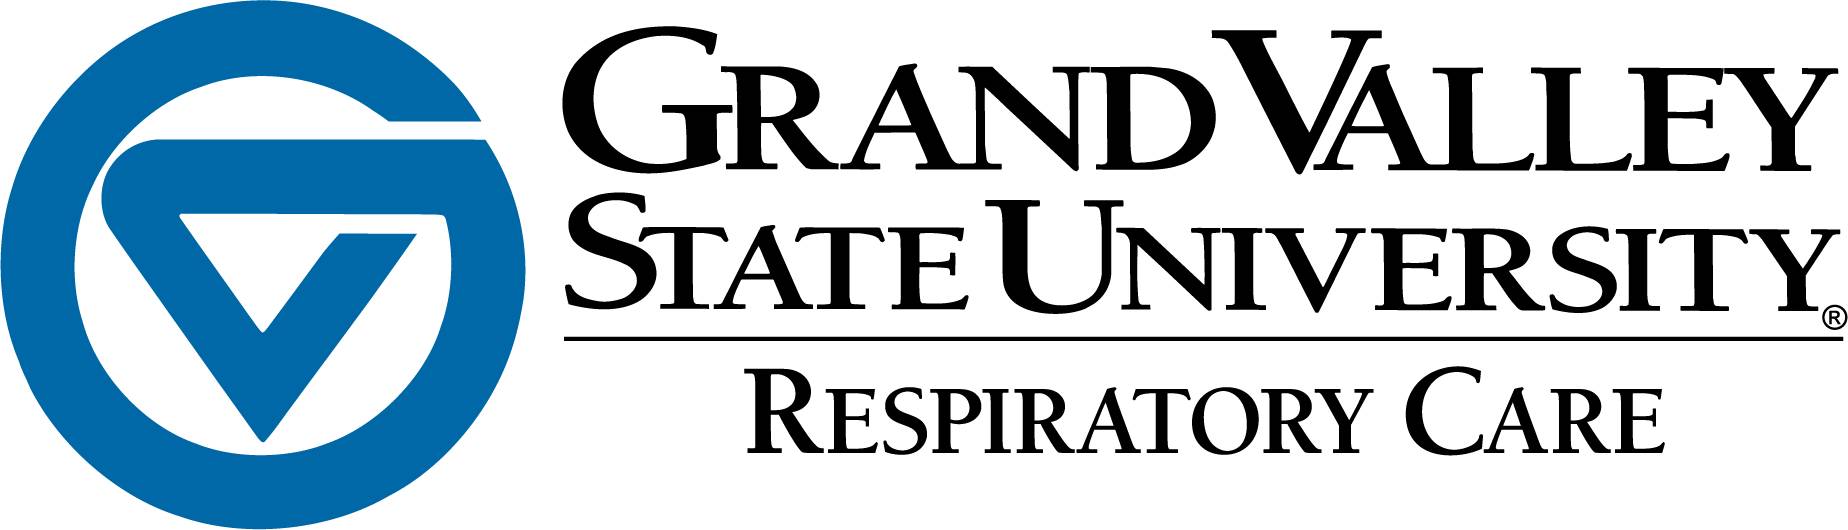 Grand Valley State University Respiratory Care logo